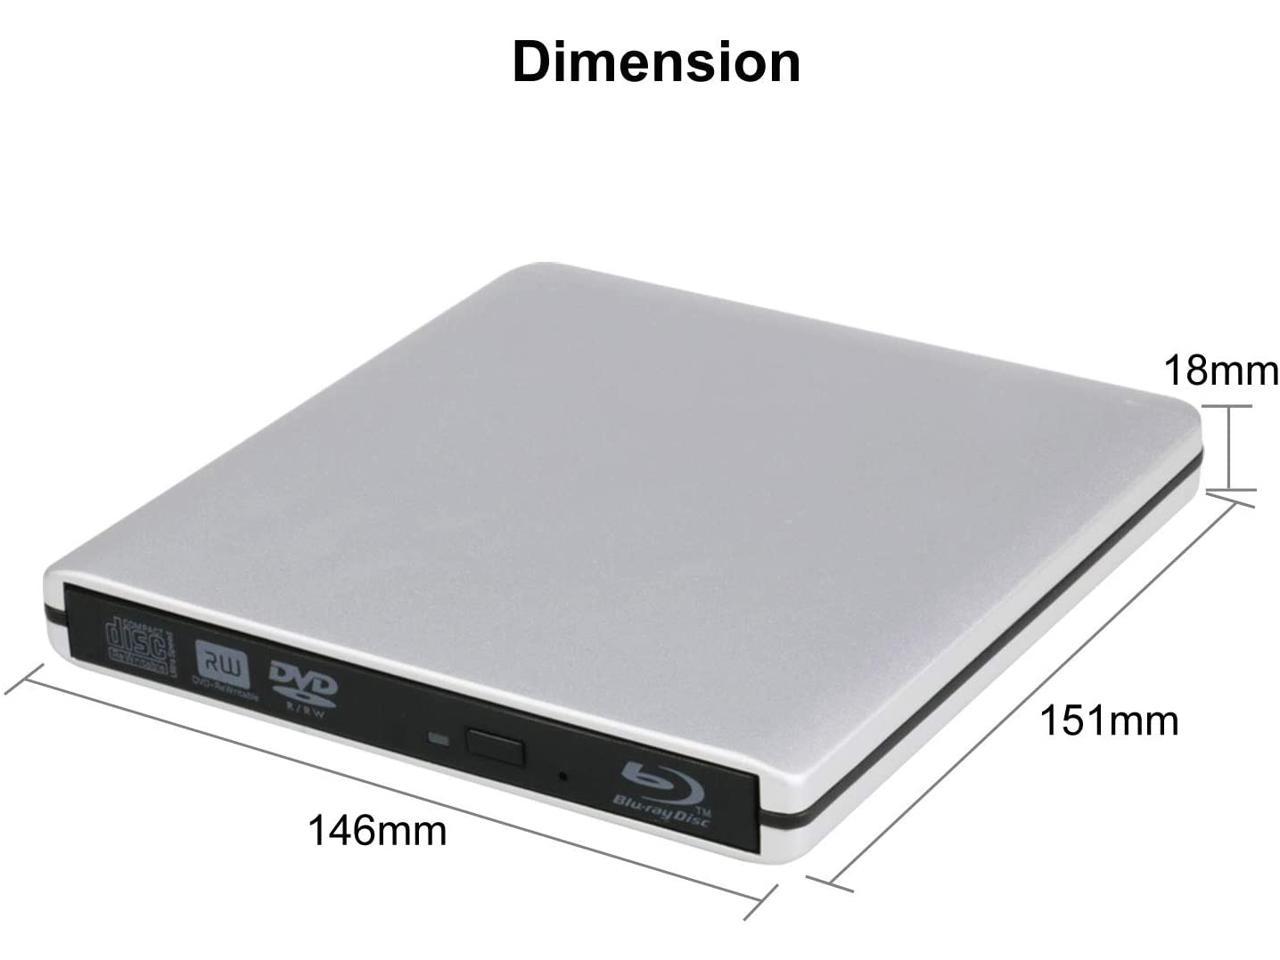 best external blue ray disc burner for mac